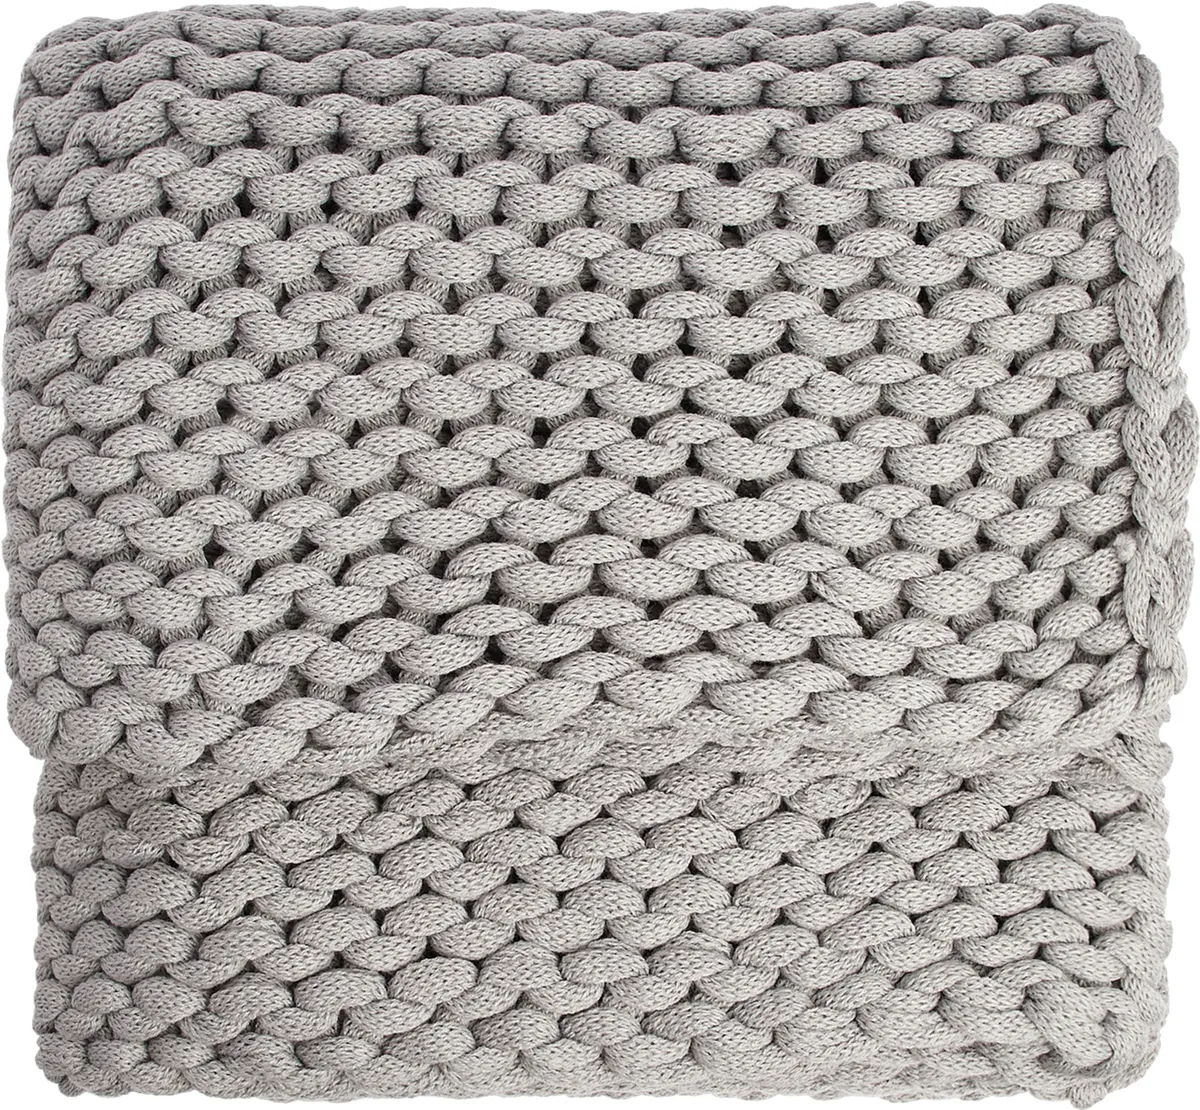 Chunky knit throw, £70, Marks & Spencer